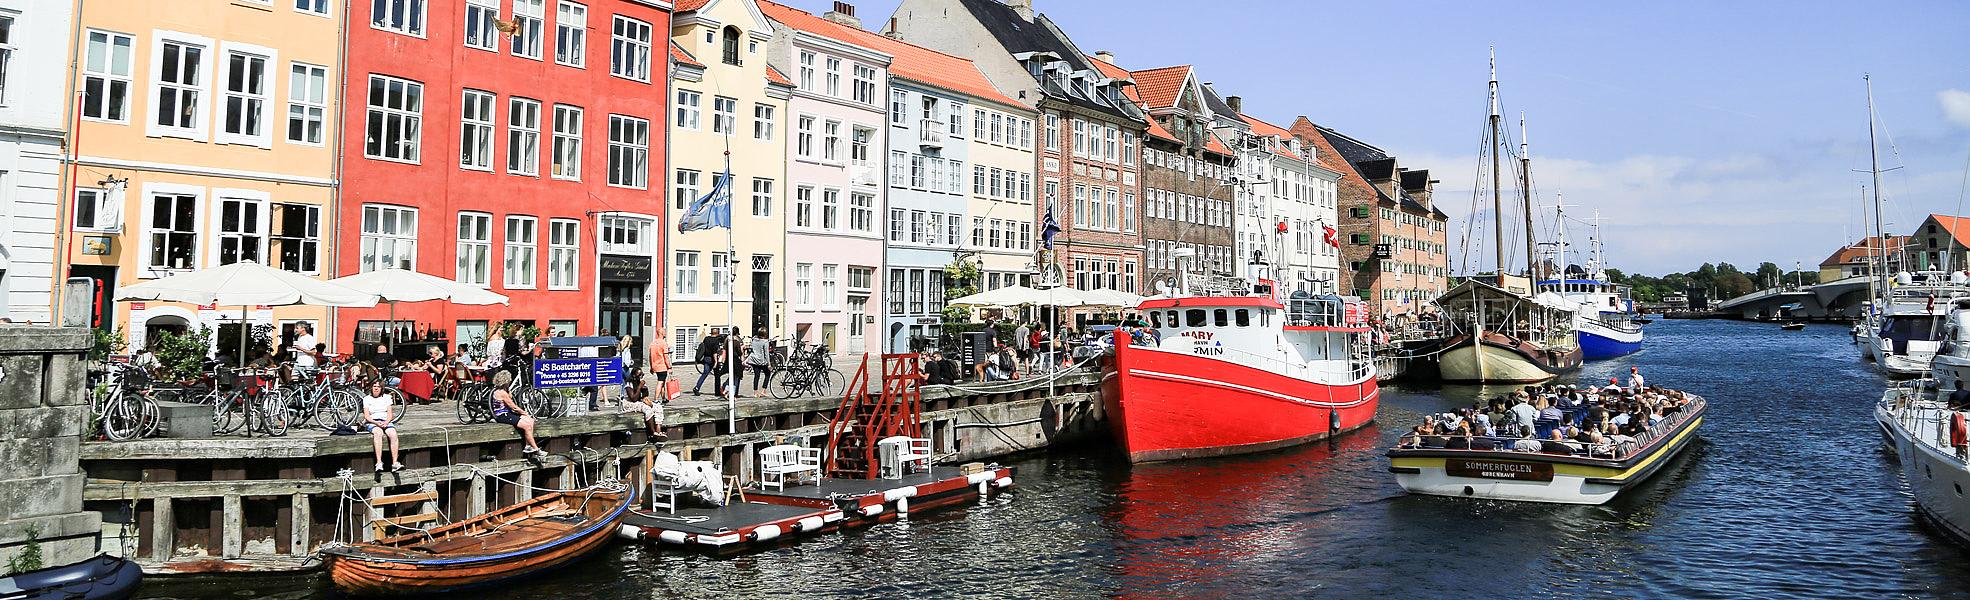 District of Nyhavn